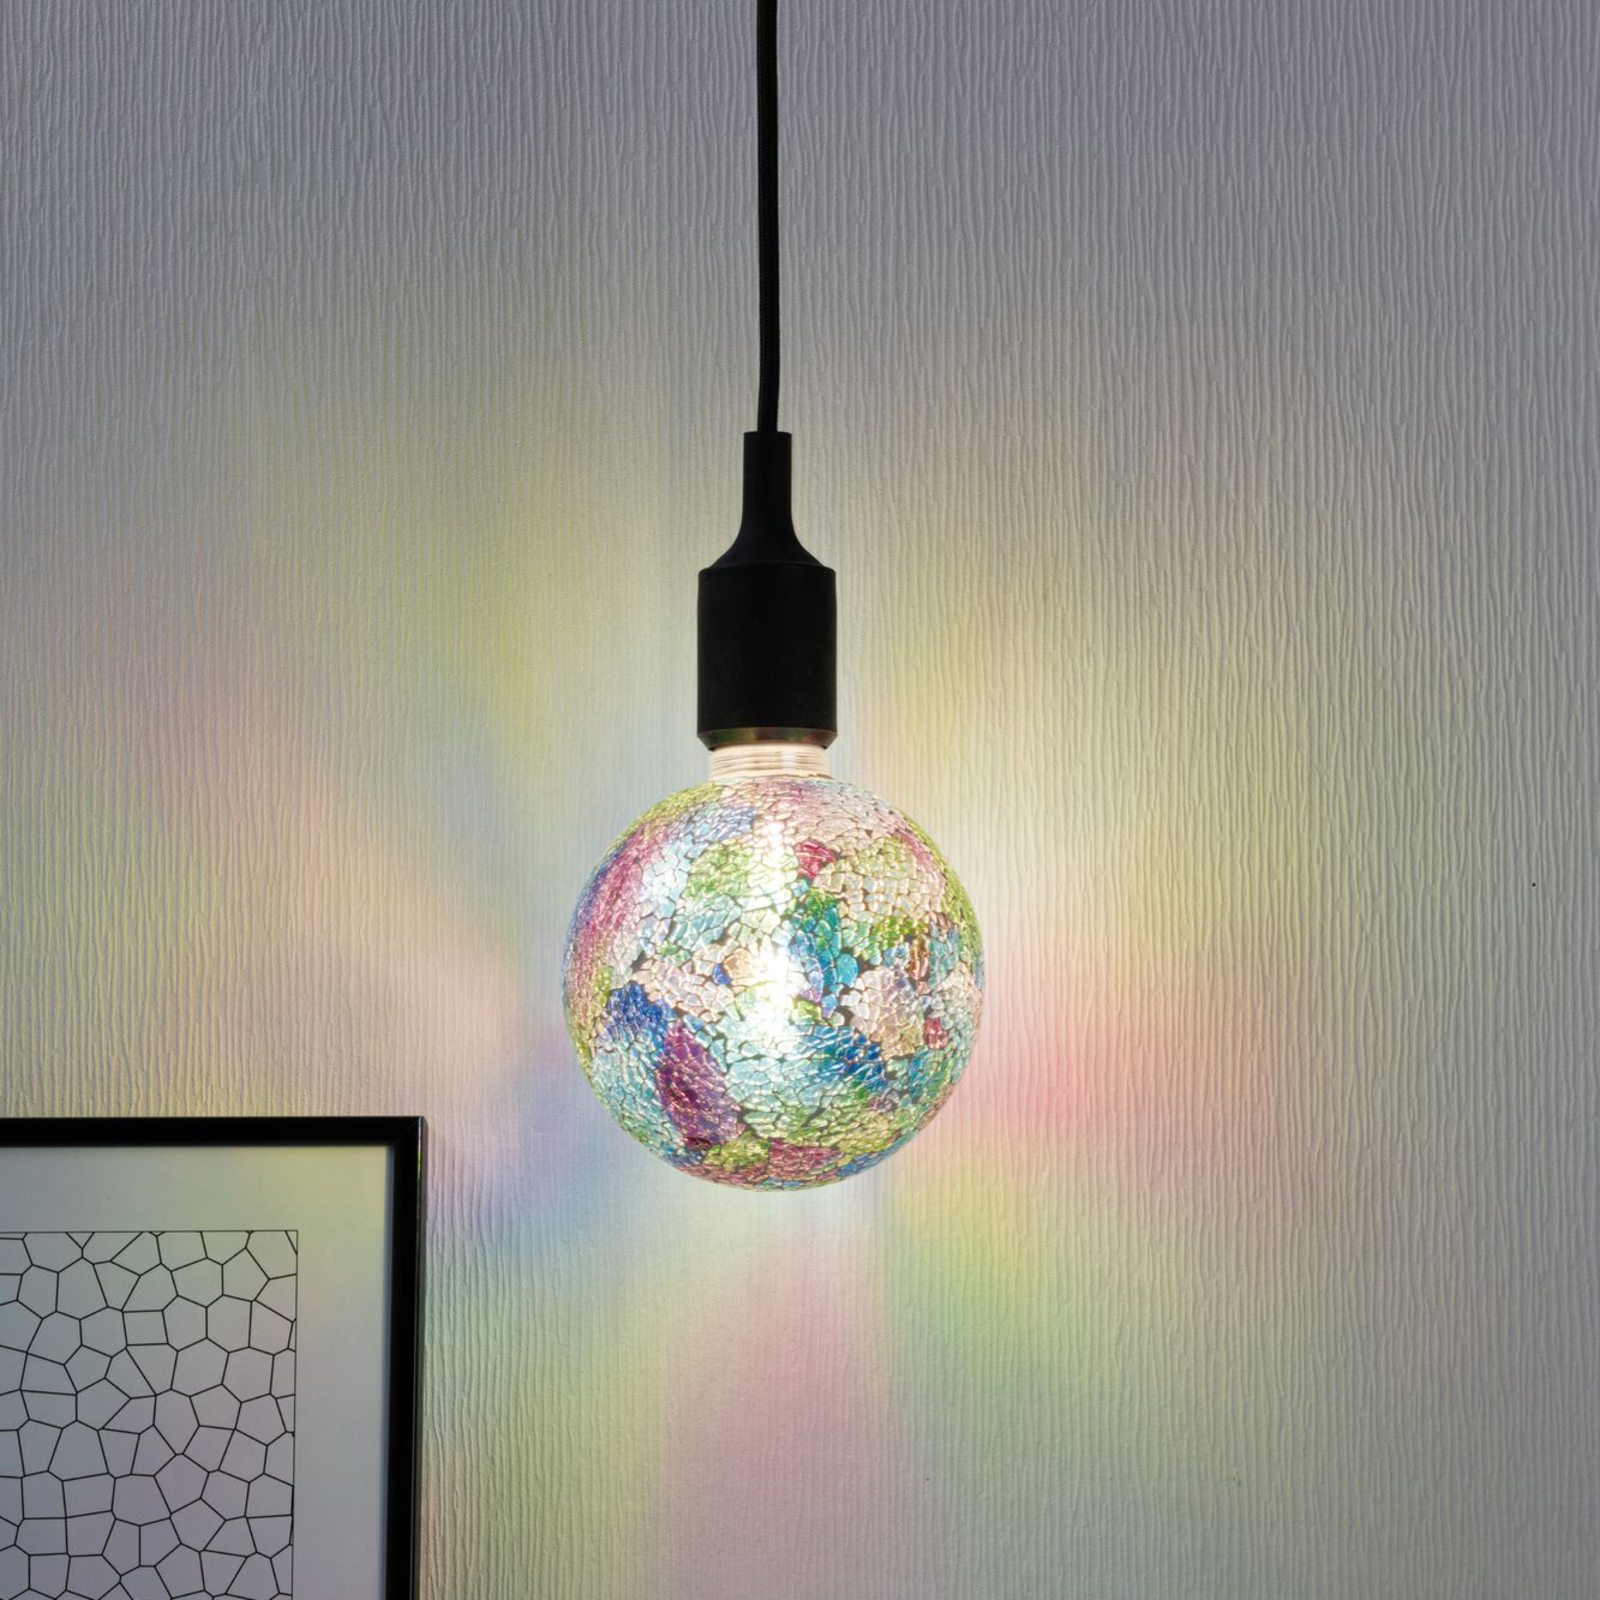 Paulmann E27 globe LED 5 W Miracle Mosaic mix